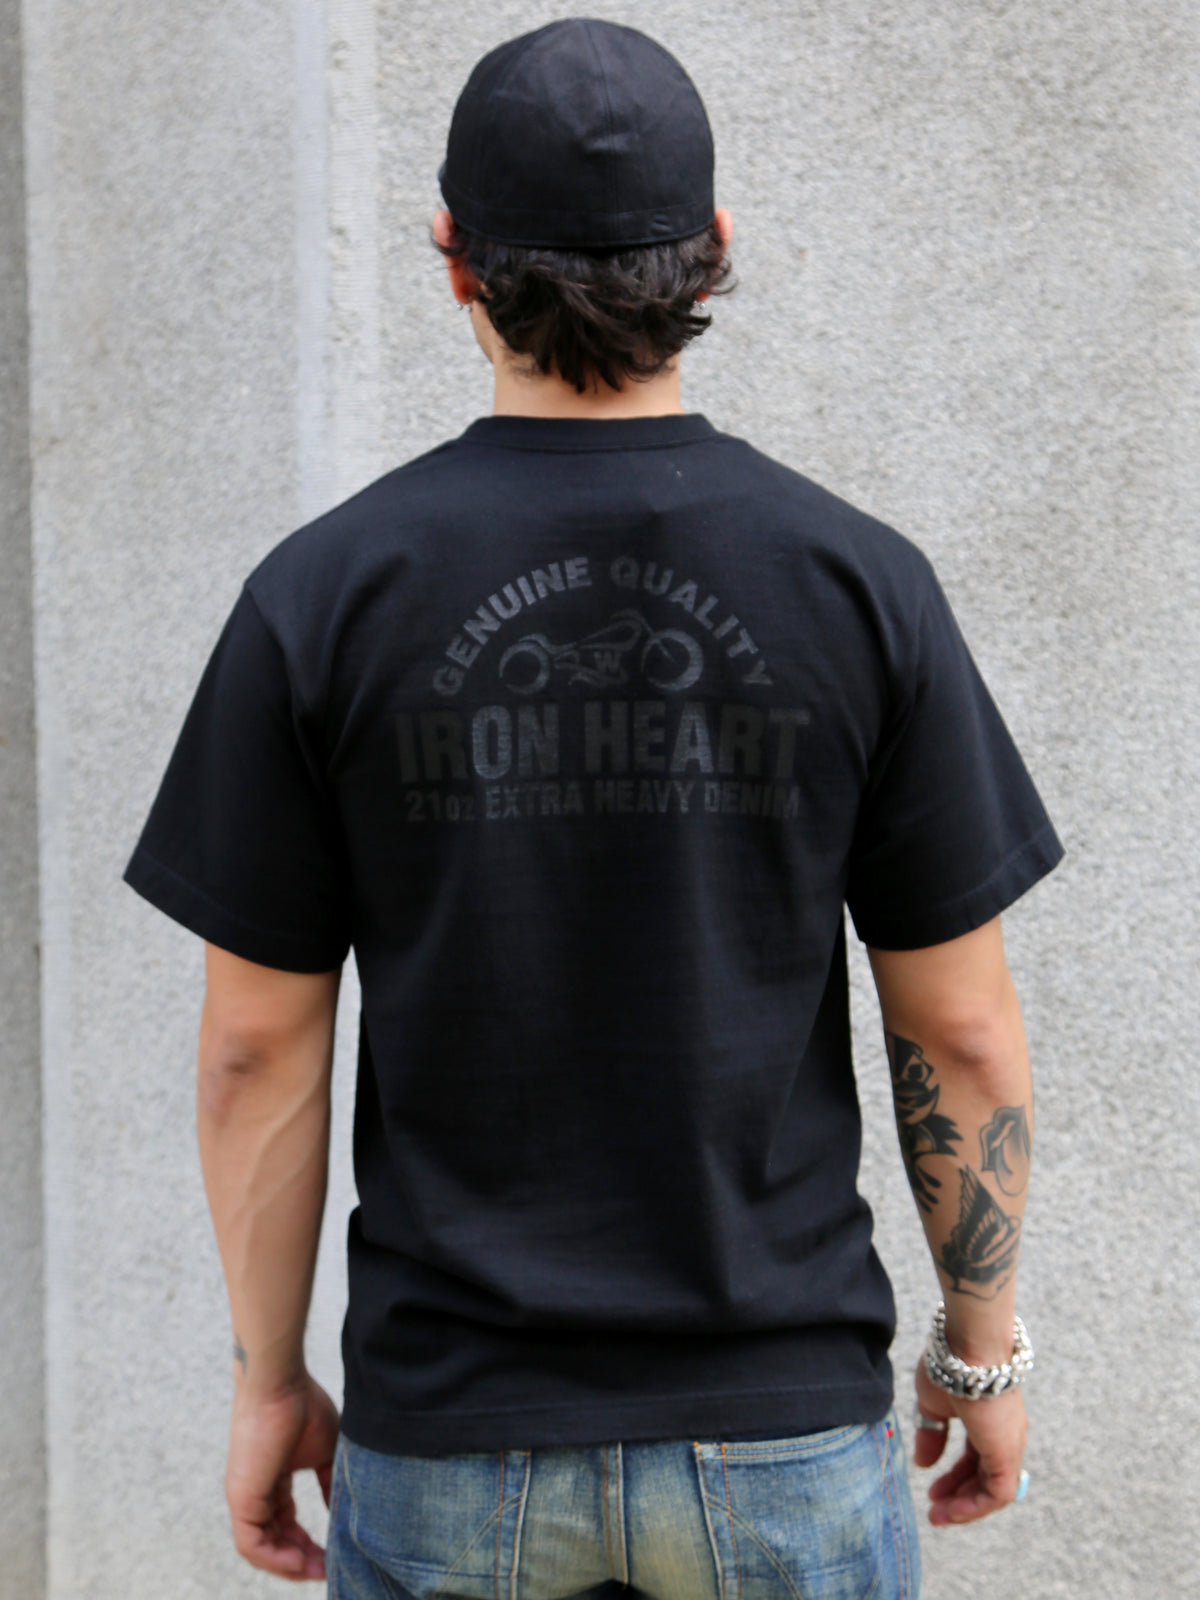 Iron Heart IHT-2401-BLK 7.5Oz Printed Loopwheel Crew Neck T-Shirt – Black